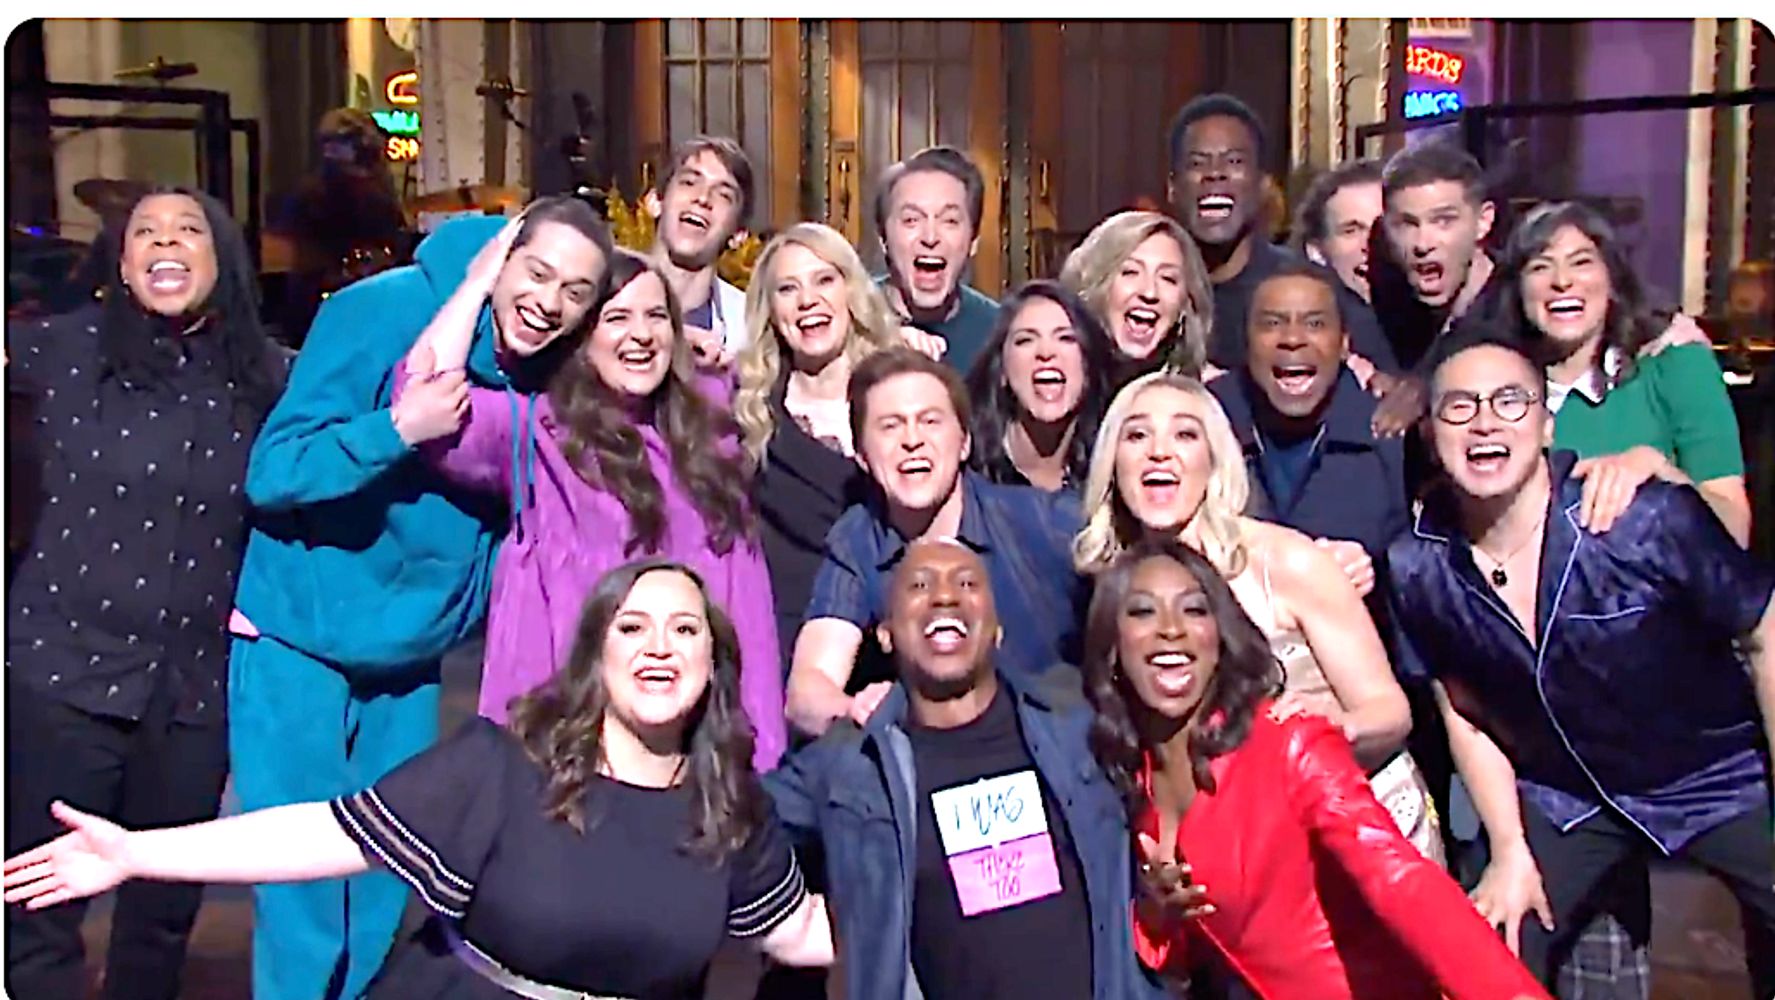 'Saturday Night Live' Cast Bids Poignant Farewell After 'Crazy' Season